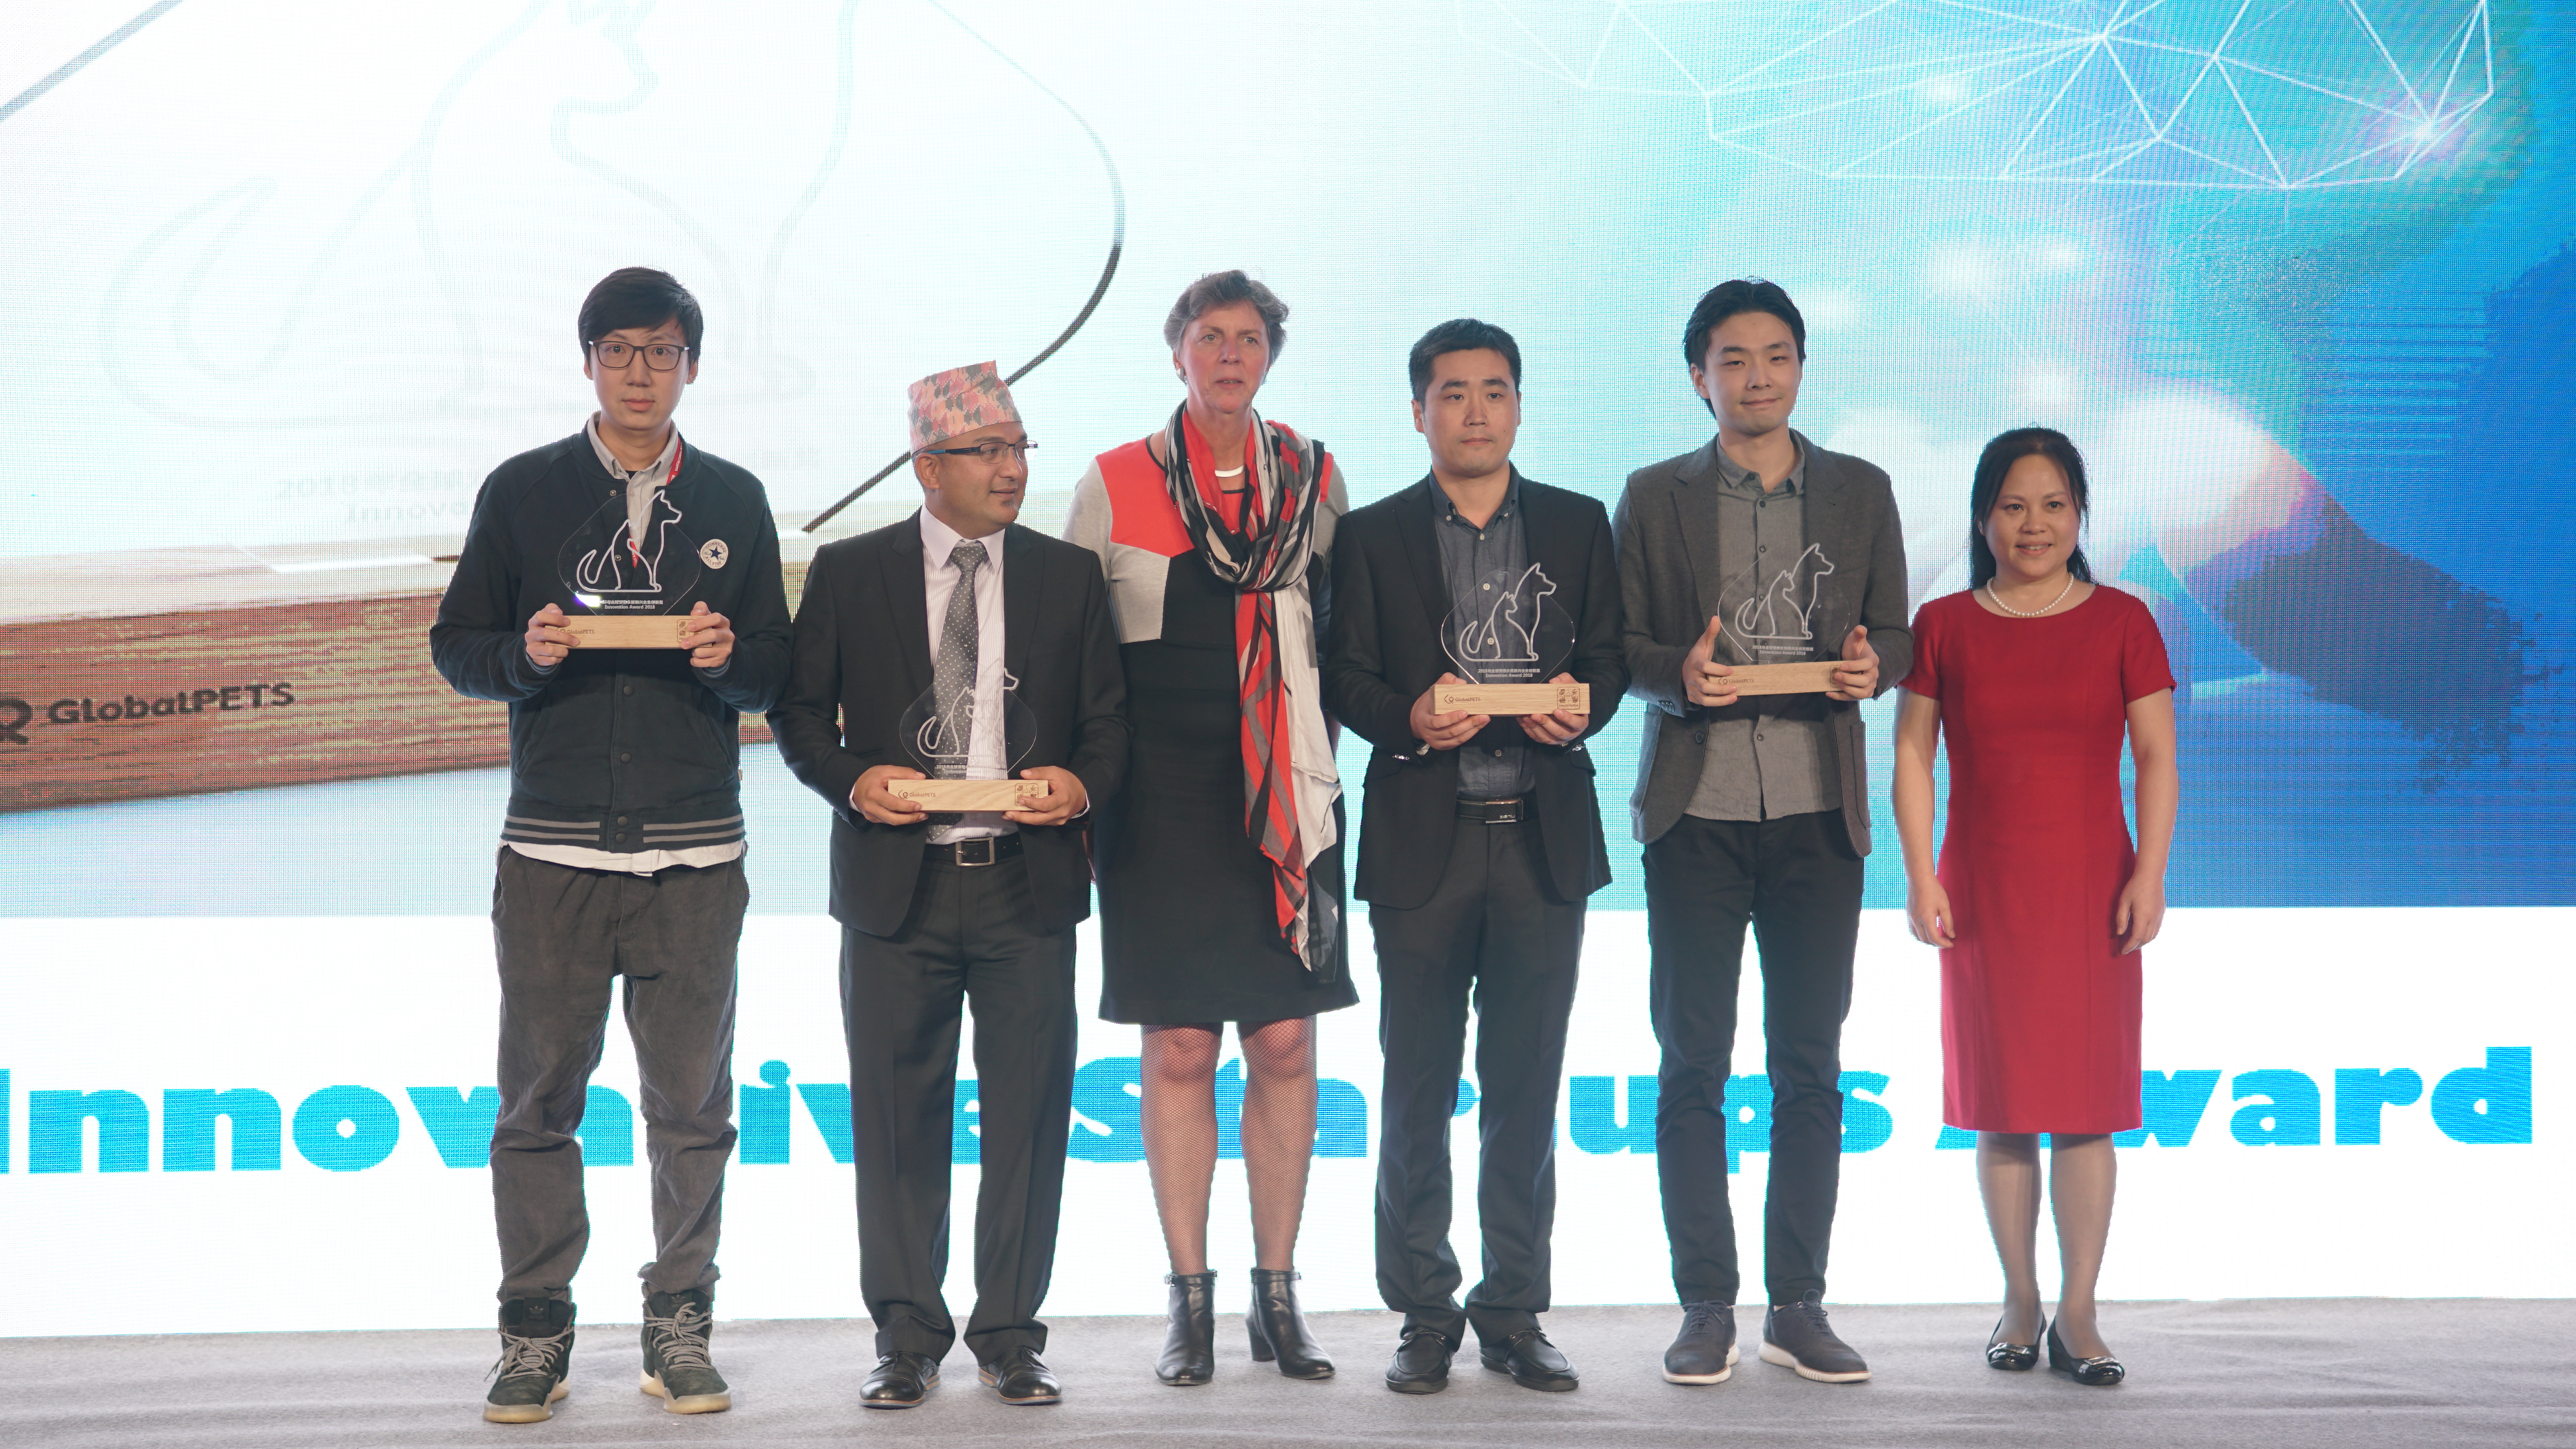 CIPS Innovation Award showcases innovative products around the world